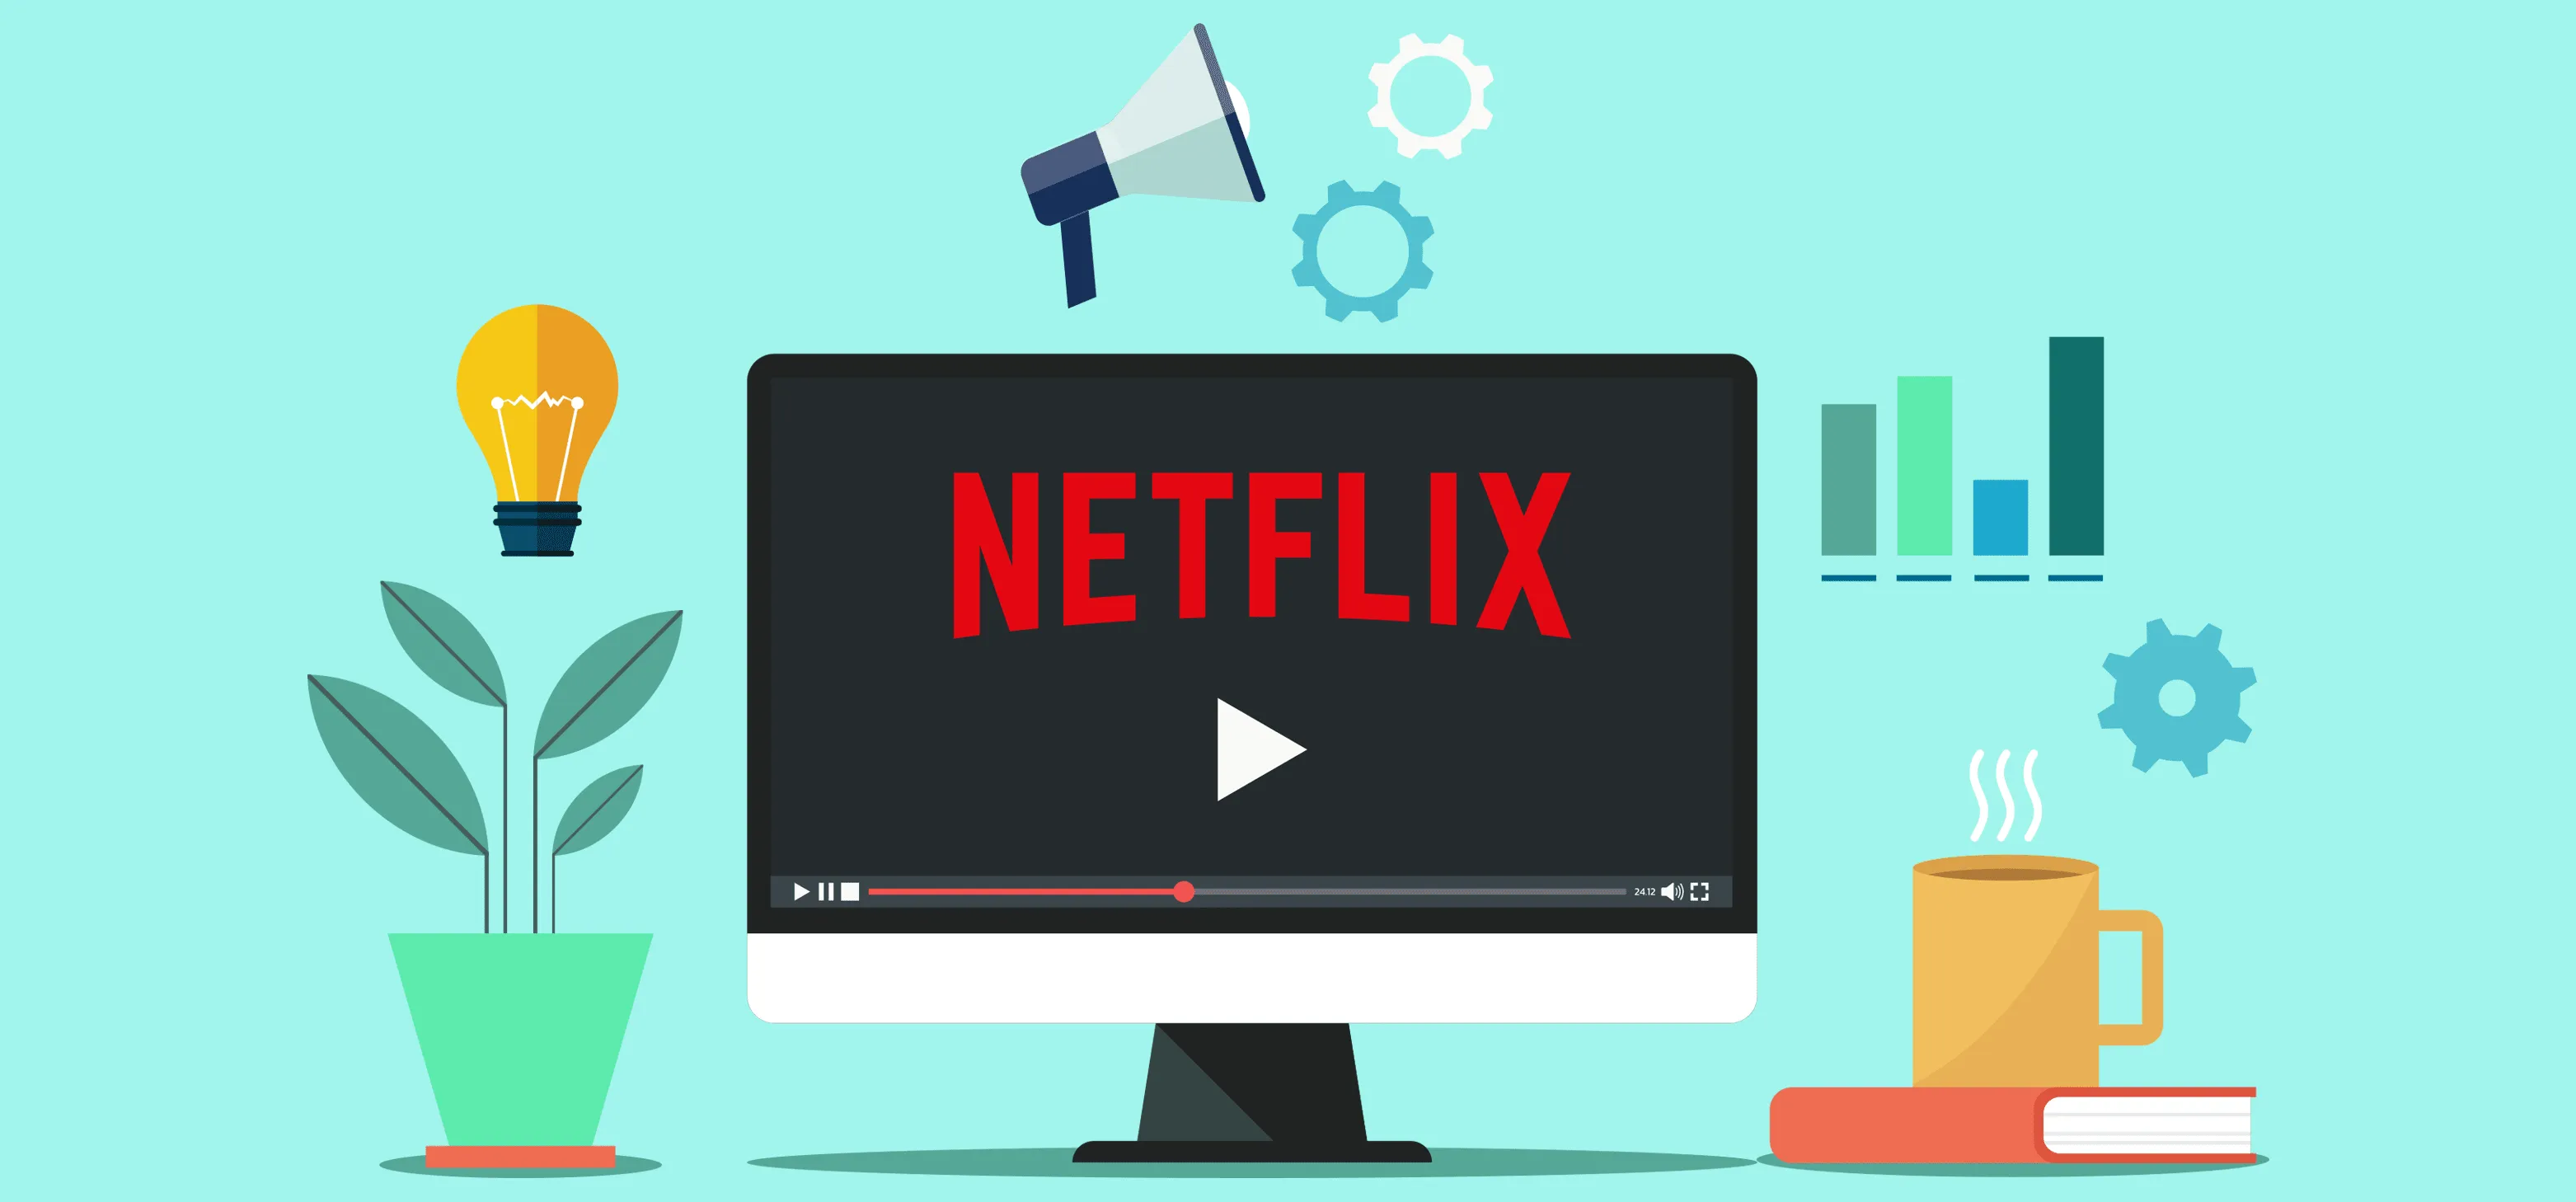 Netflixs Marketing Startegy